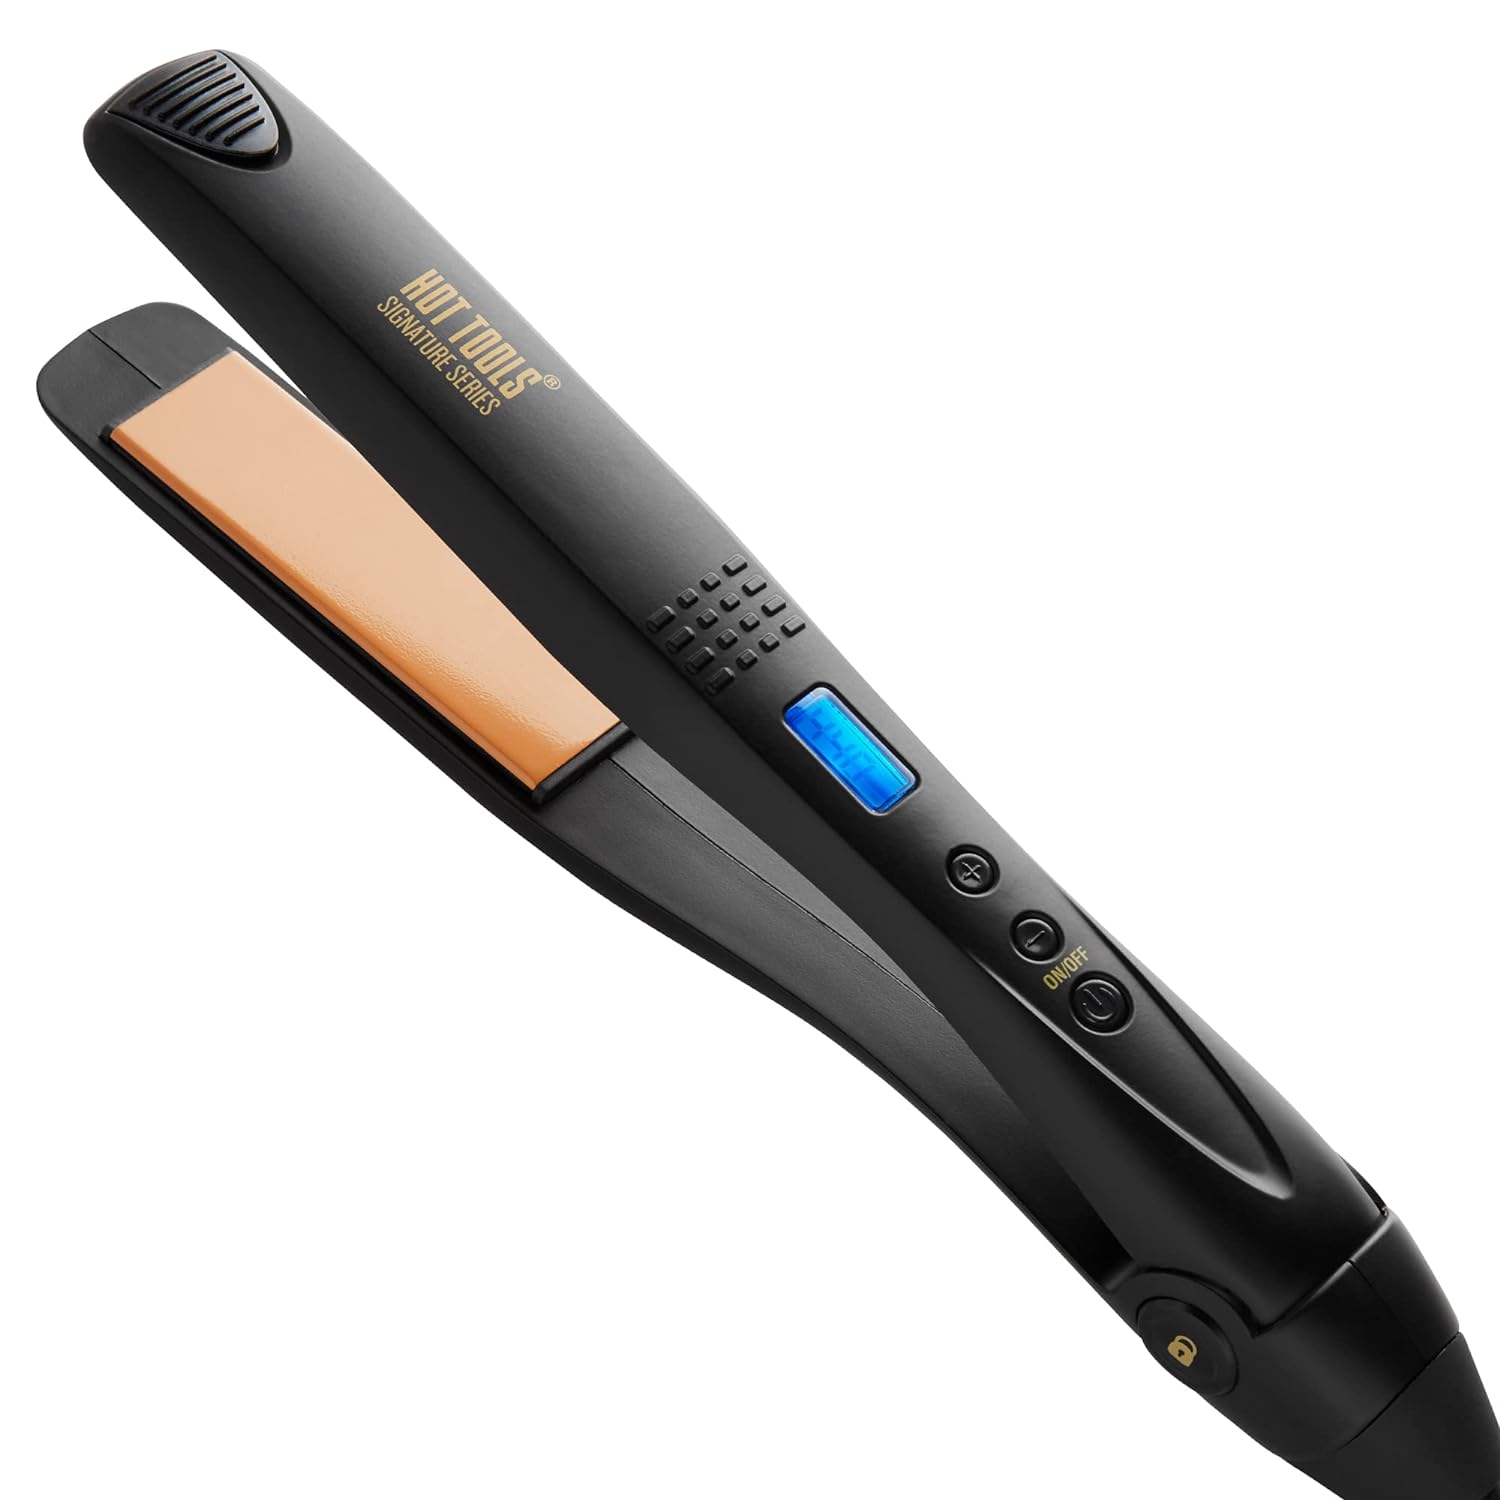 Hot Tools Signature Series Digital Flat Iron for Curls